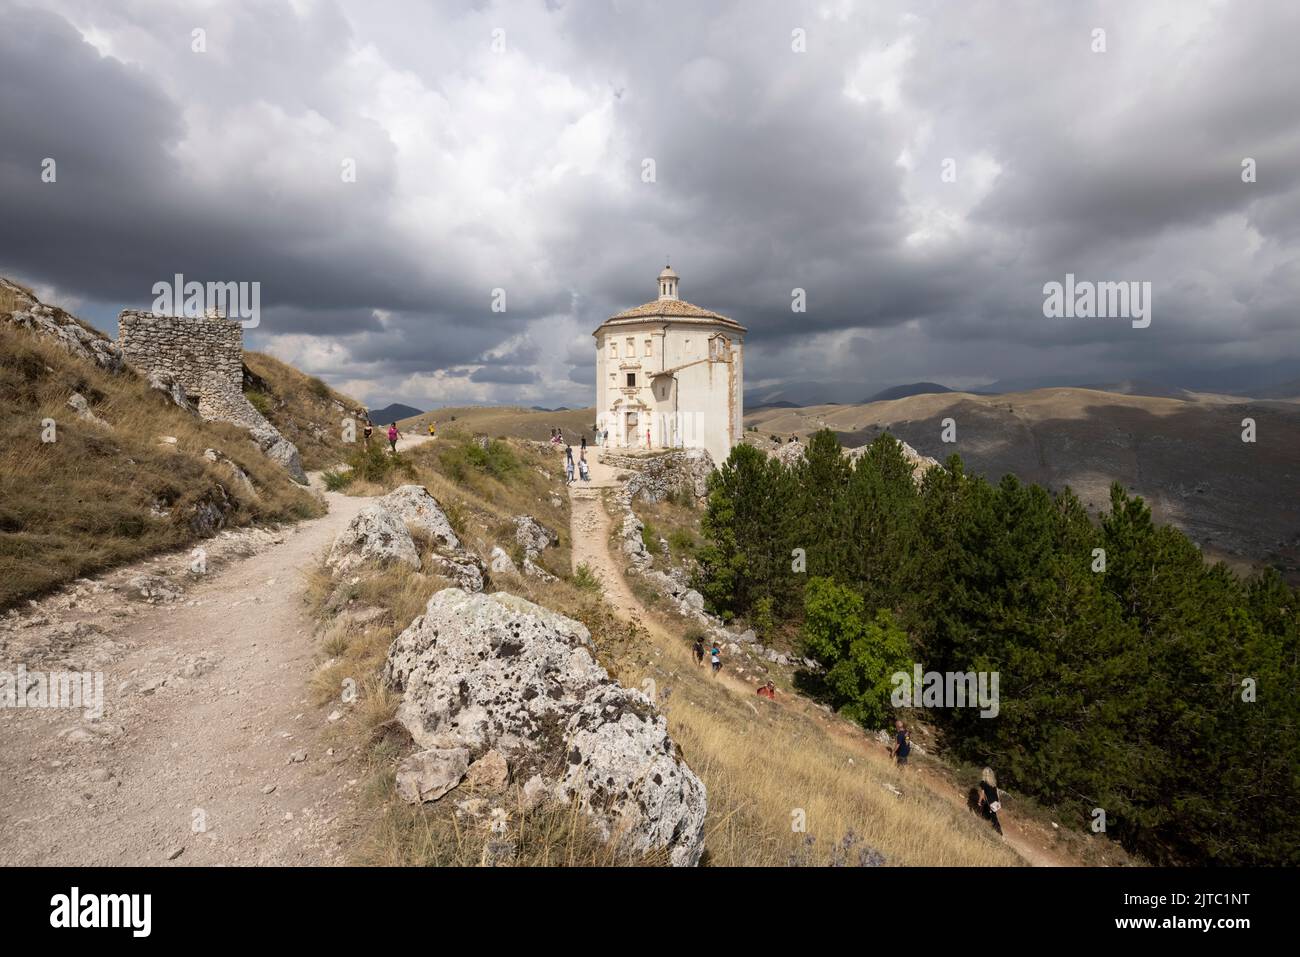 Castle ruins on mountain top at Rocca Calascio, italian travel destination, landmark in the Gran Sasso National Park, Abruzzo, Italy. Stock Photo